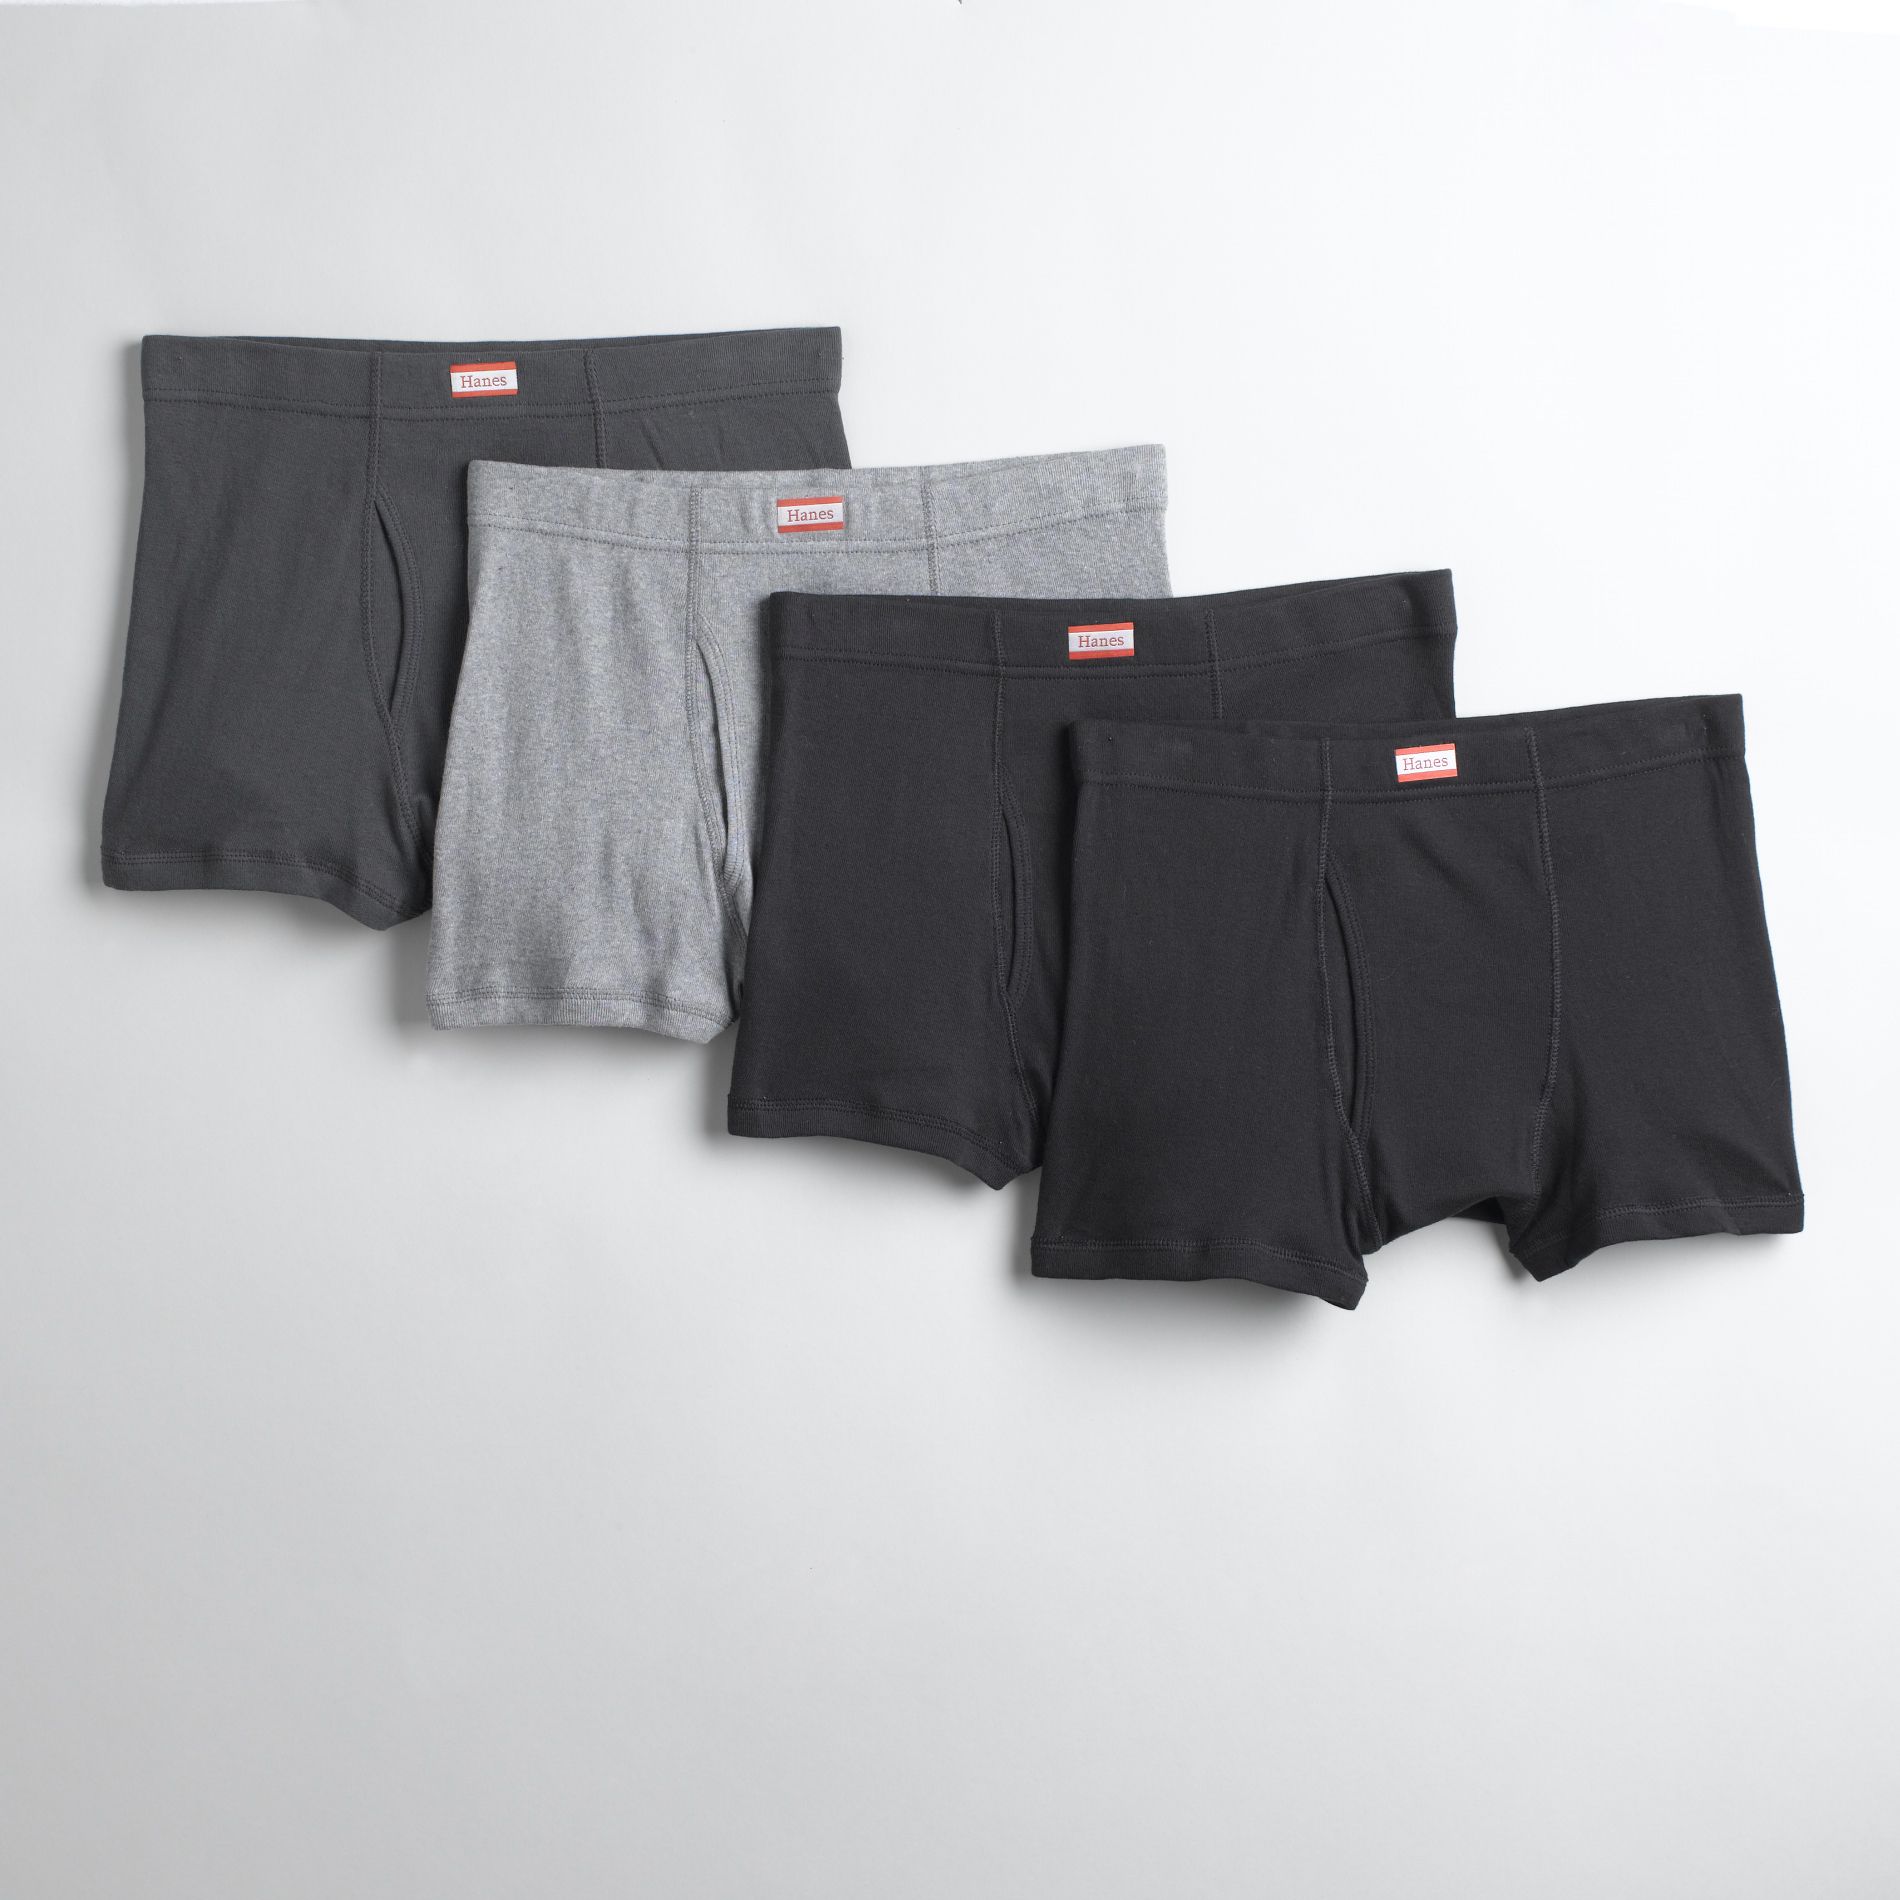 Hanes Men's 4-Pack Short Leg Boxer Briefs